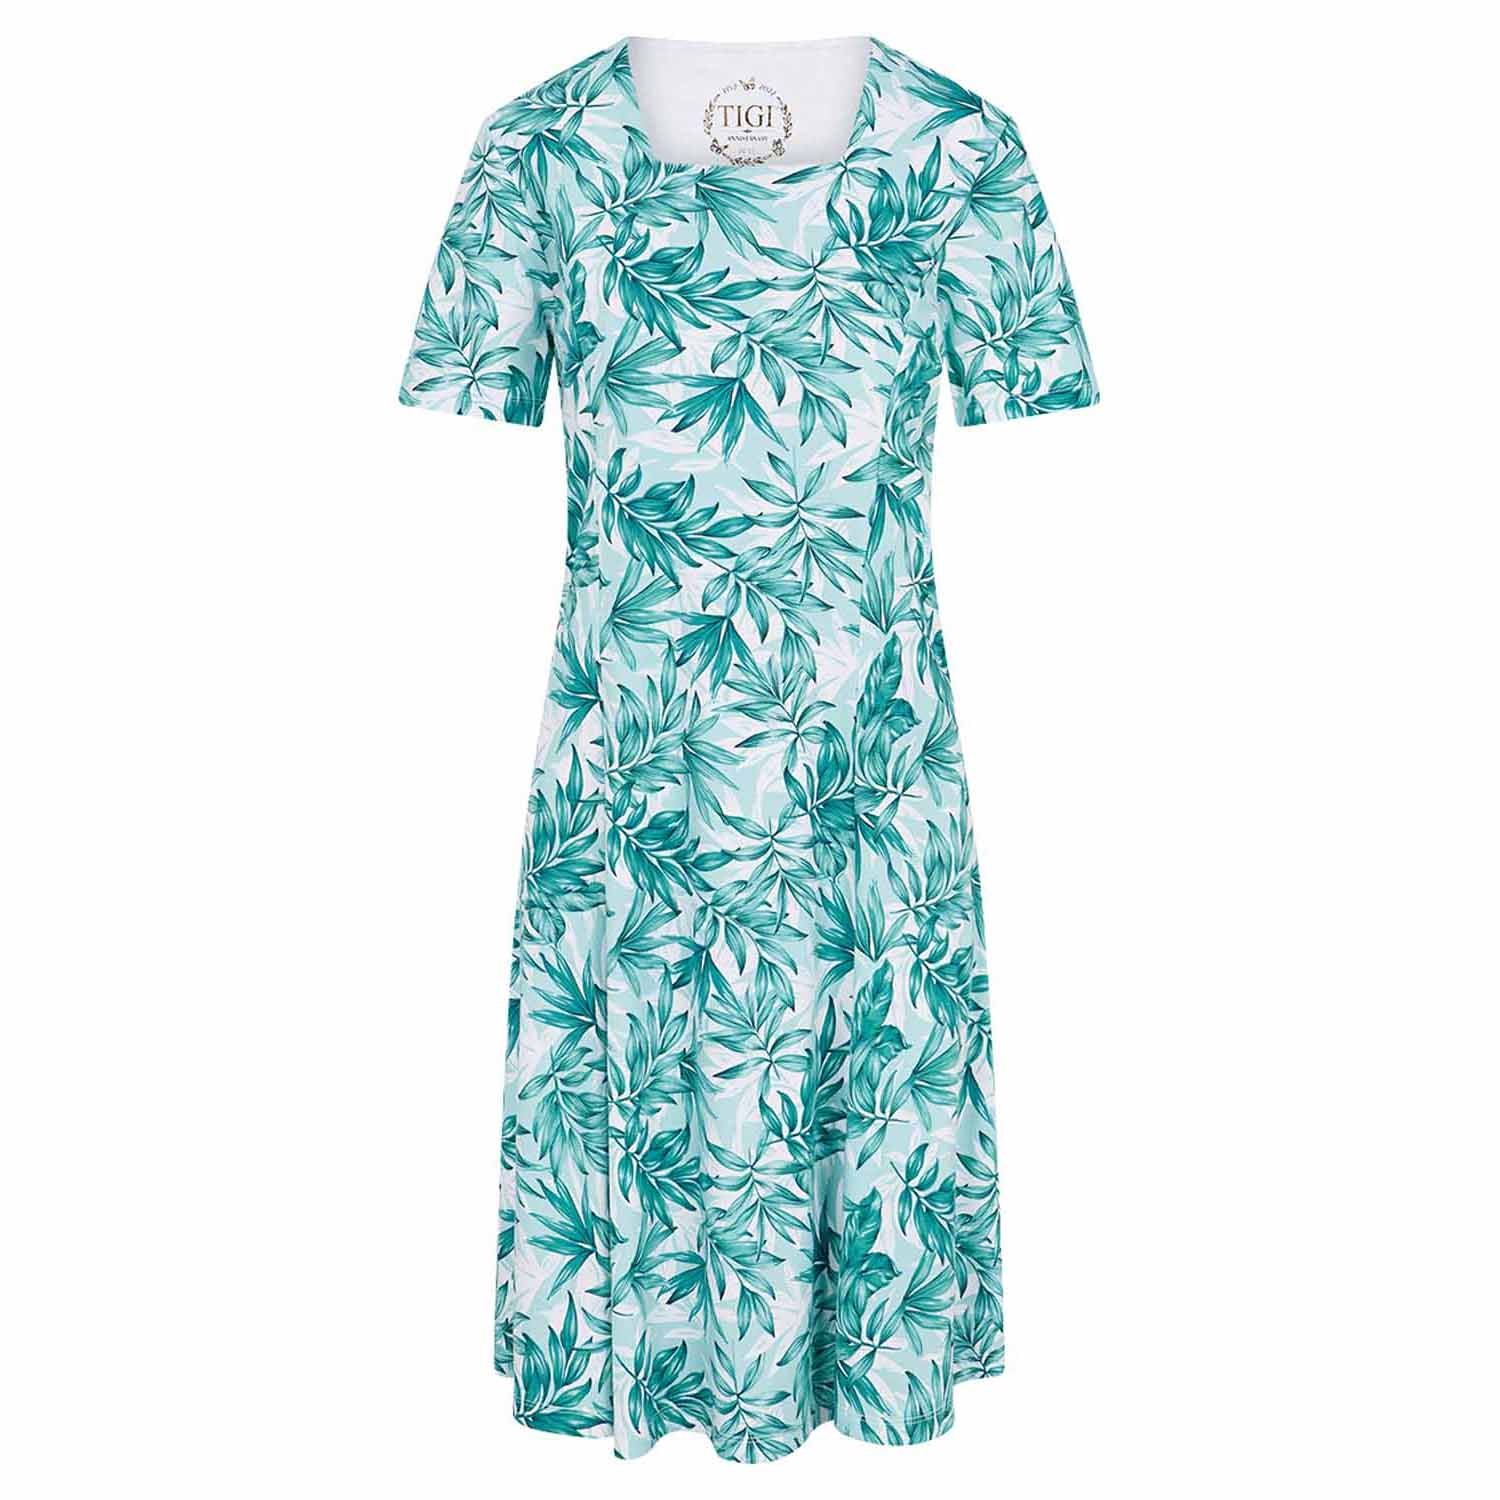 Tigiwear Leaf Print Dress - Turquoise 4 Shaws Department Stores